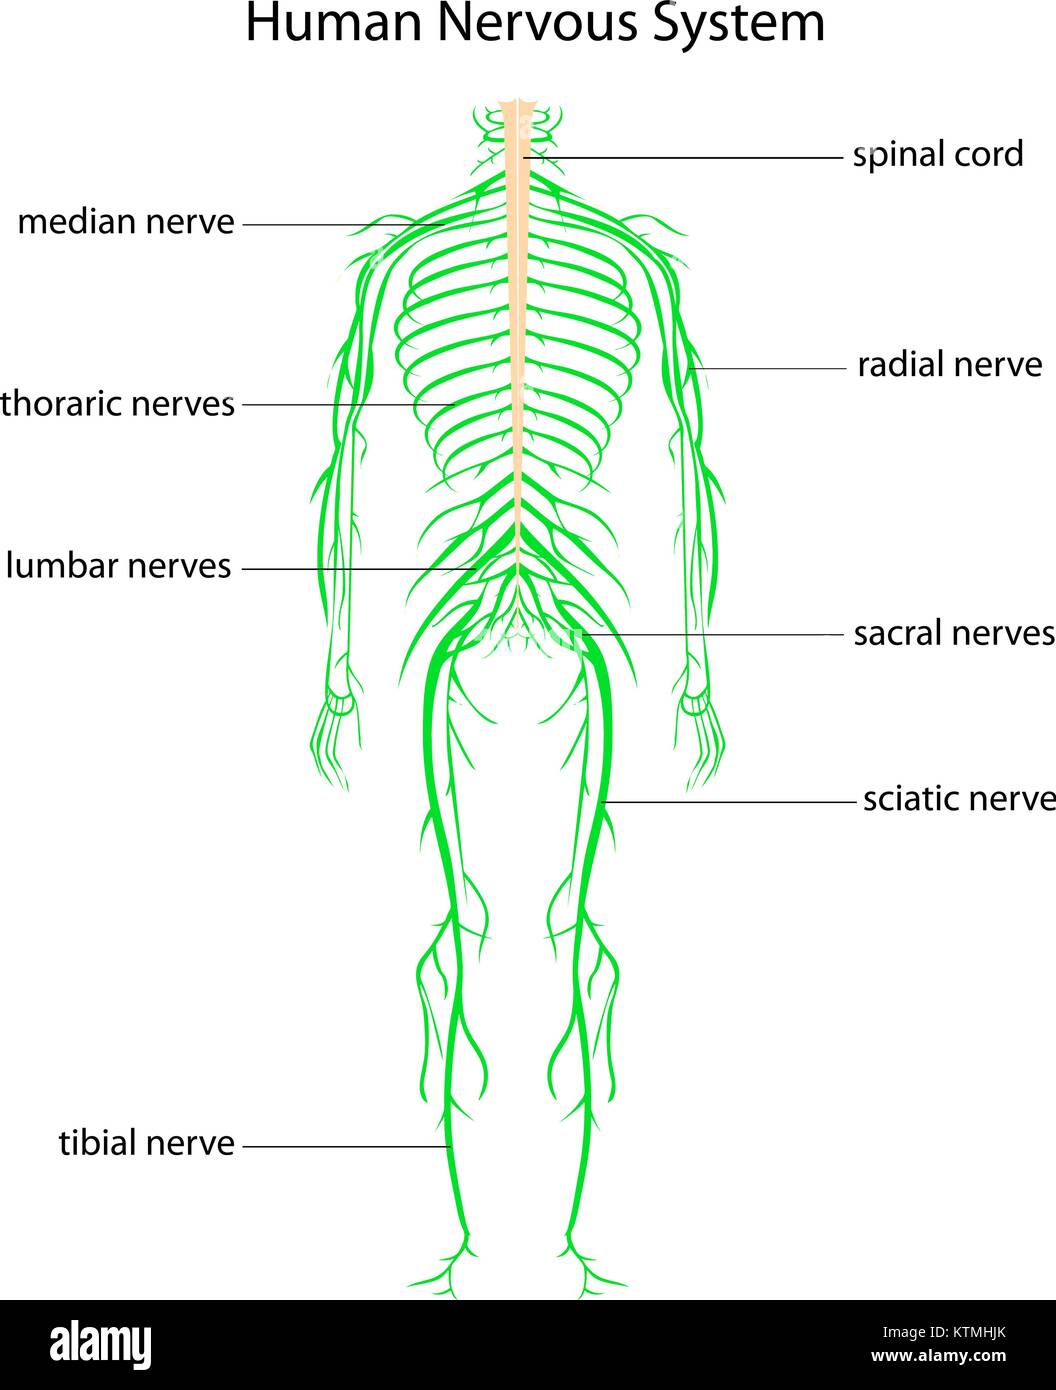 Medical Education Chart Of Biology For Nervous System Diagram Stock ...